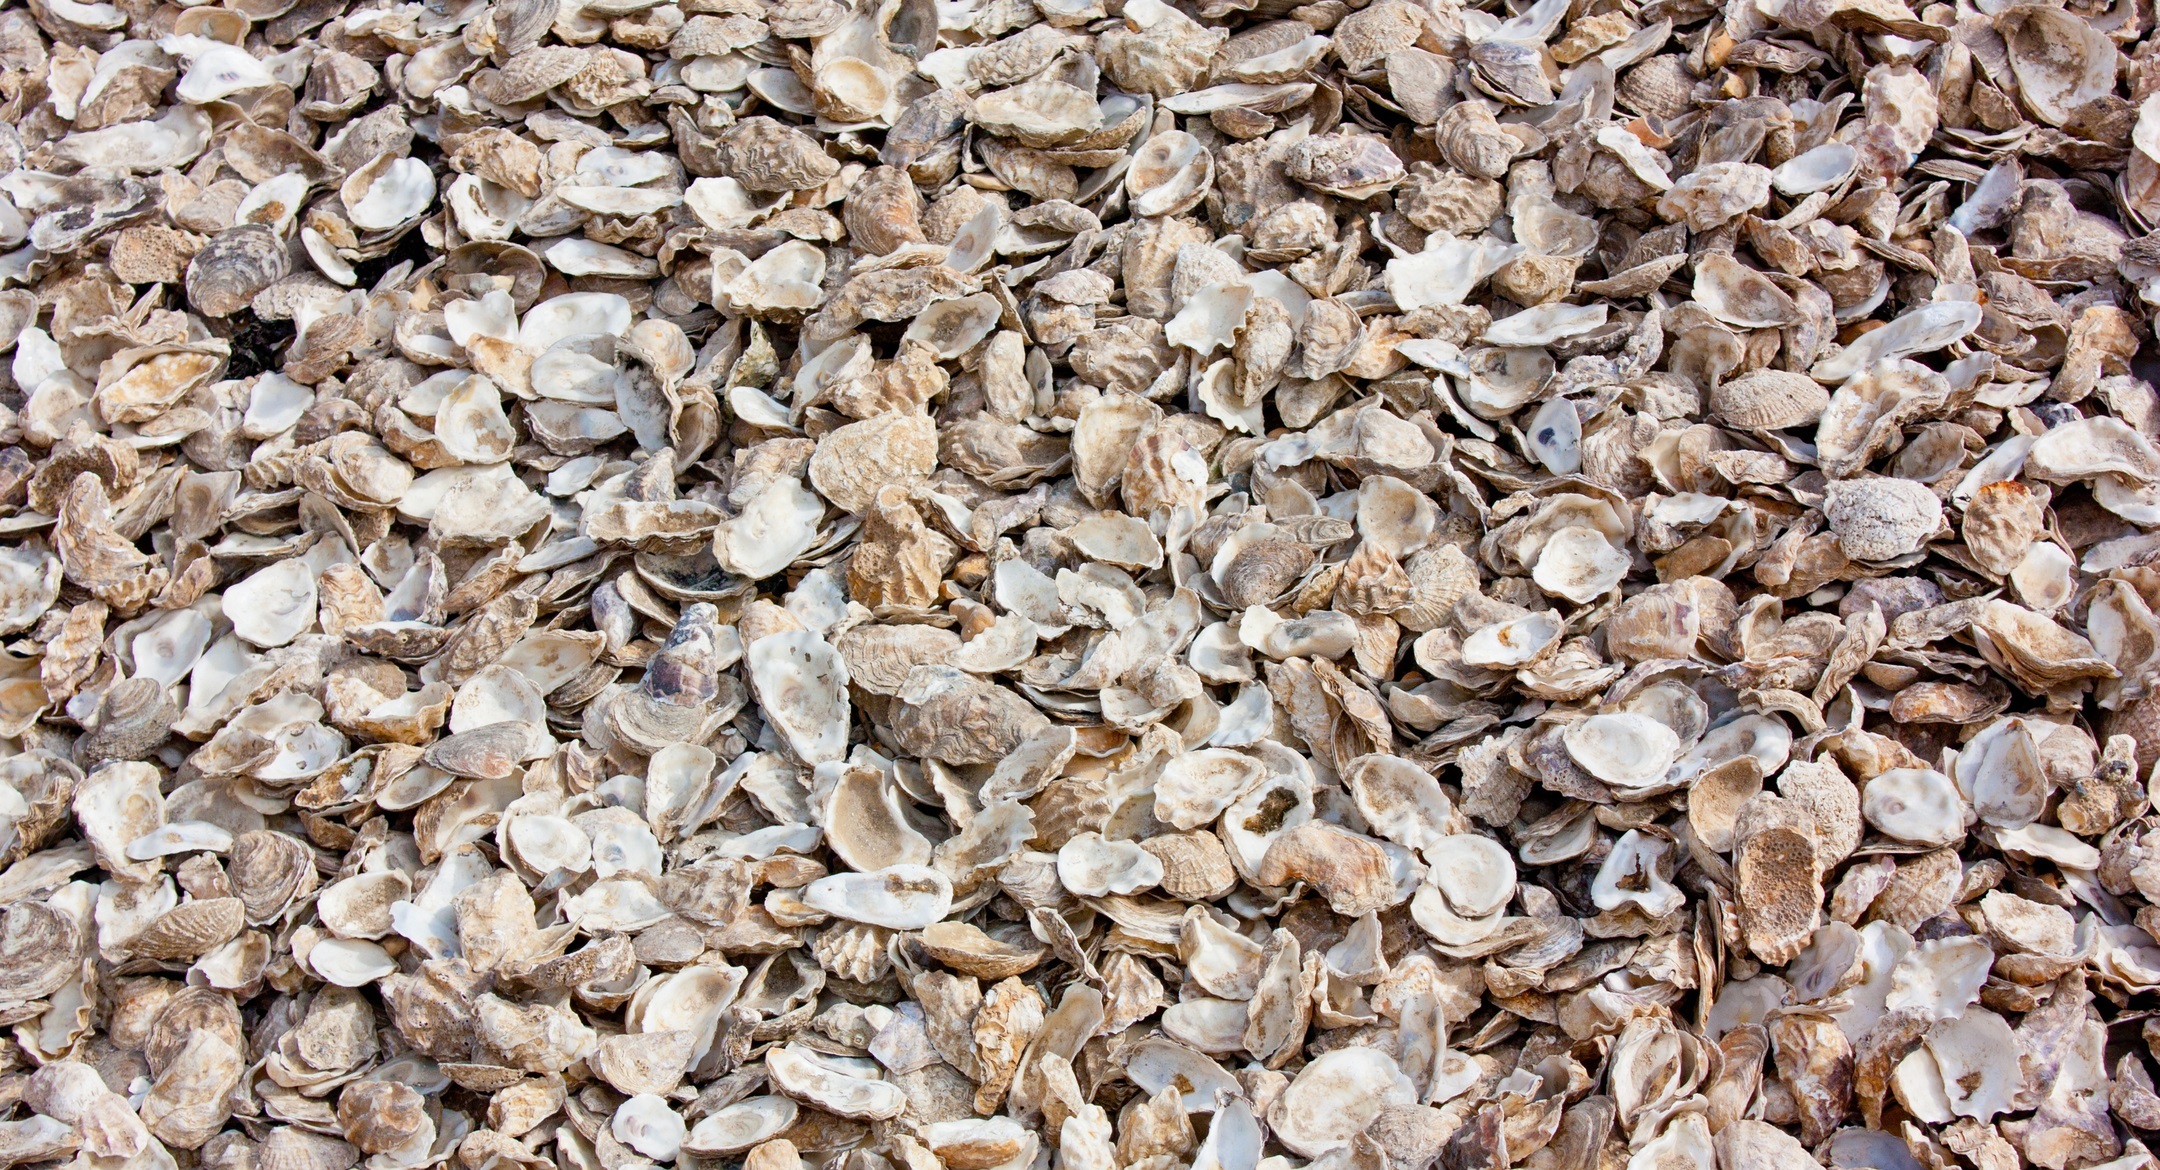 Oyster shells. Credit: Kevinr4 / Shutterstock